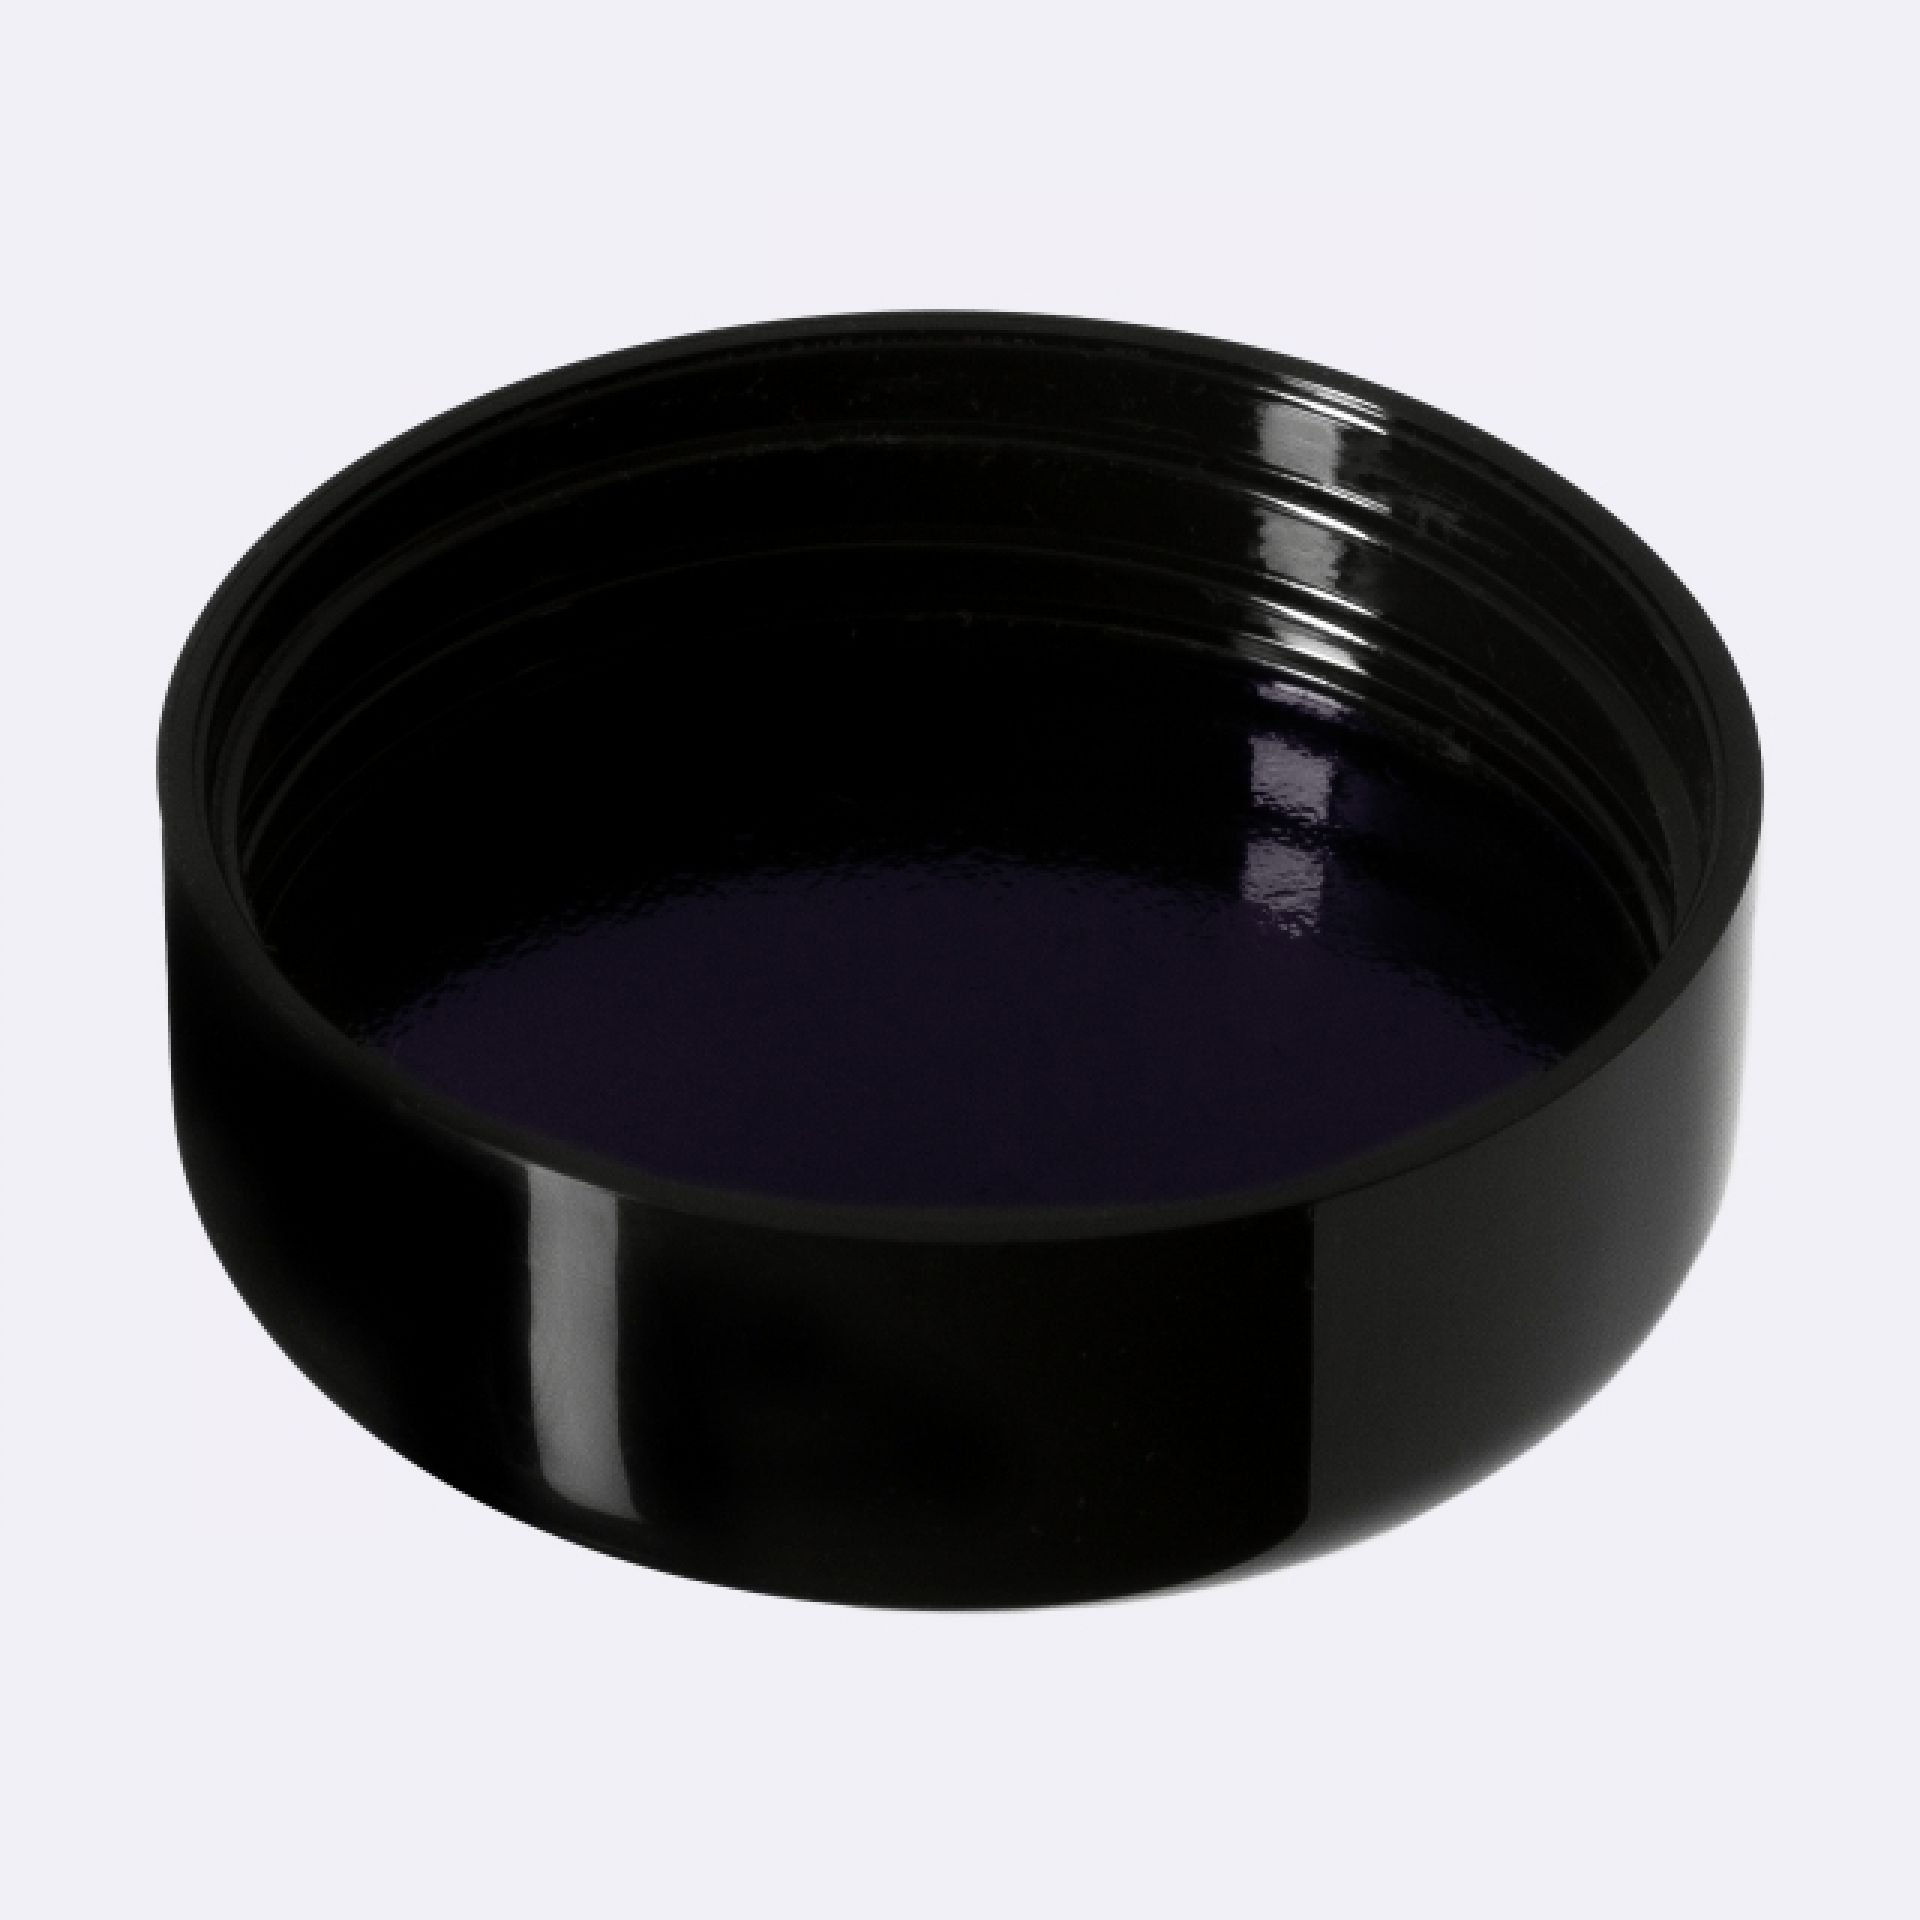 Lid Classic 45/400, SAN, black, glossy finish, violet Phan inlay (Saturn 50/100)